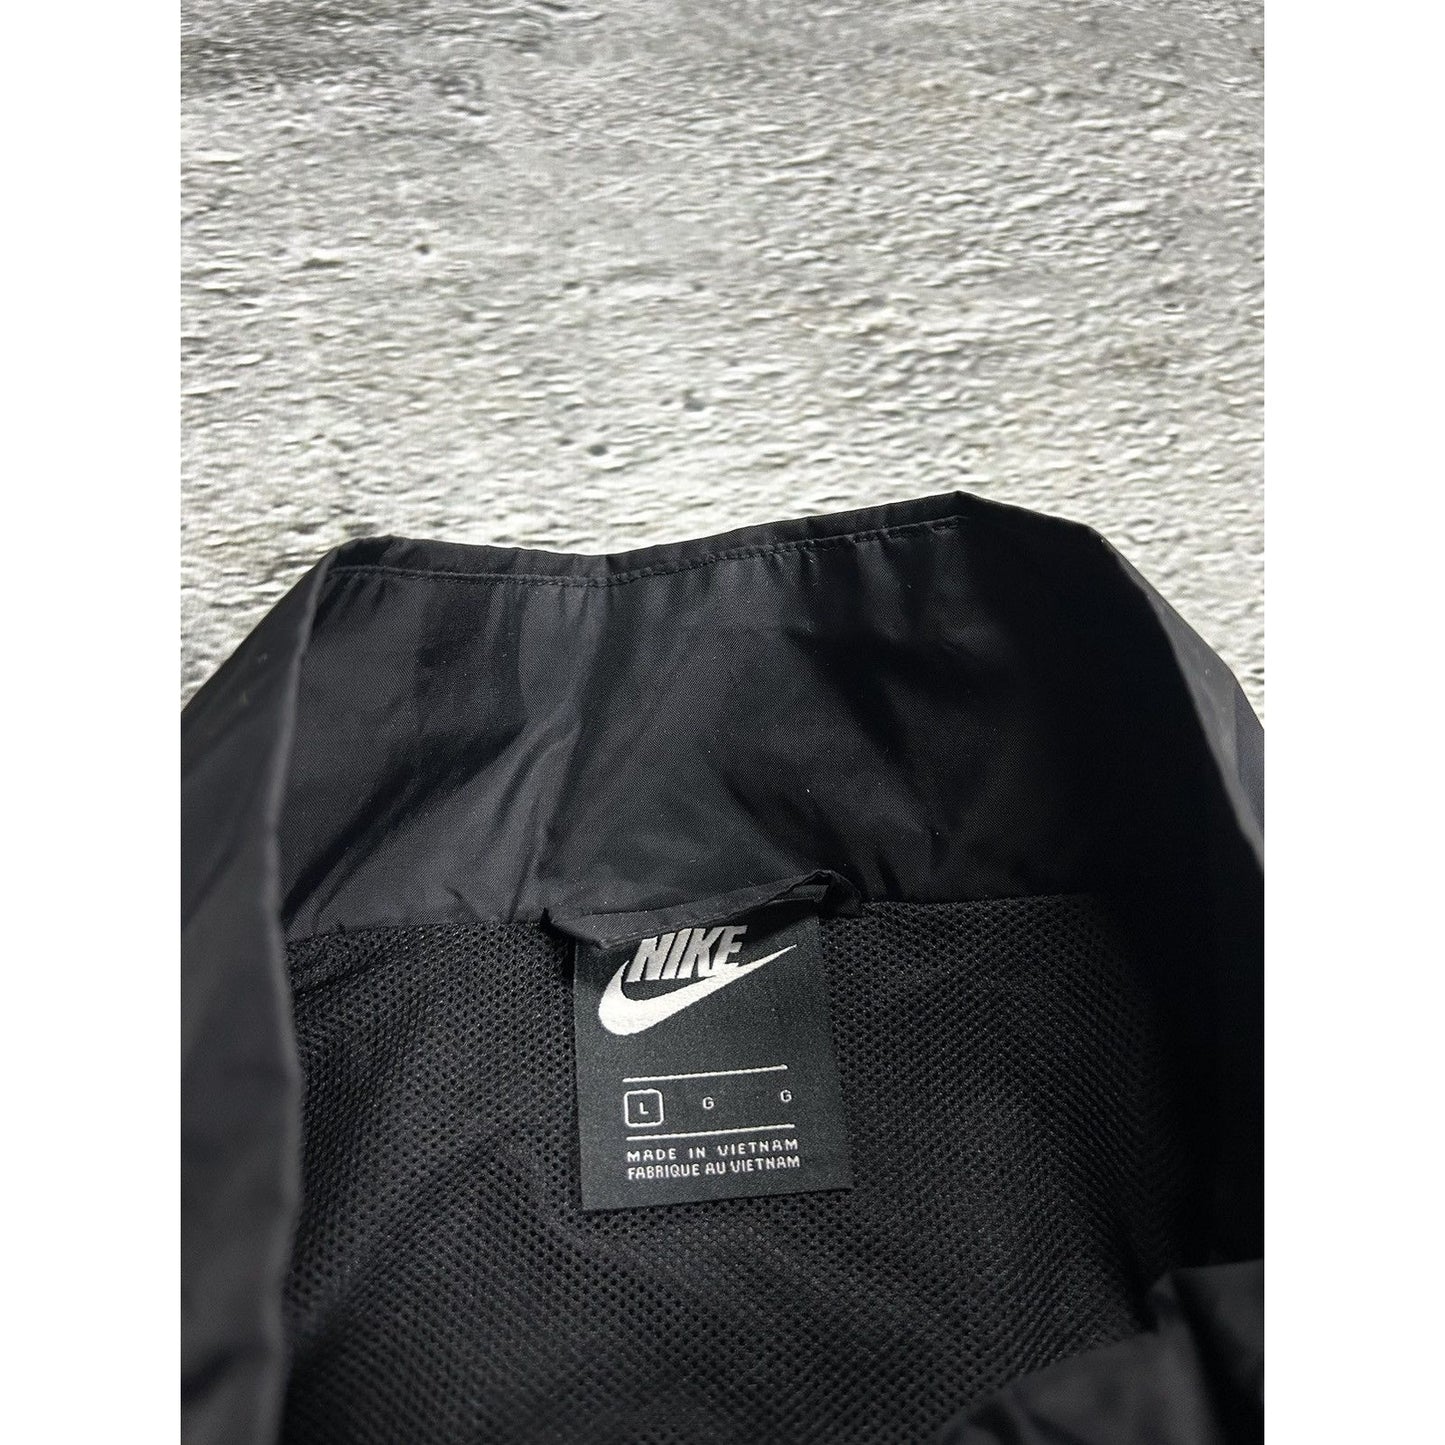 Nike track suit vintage black nylon pants jacket drill Y2K